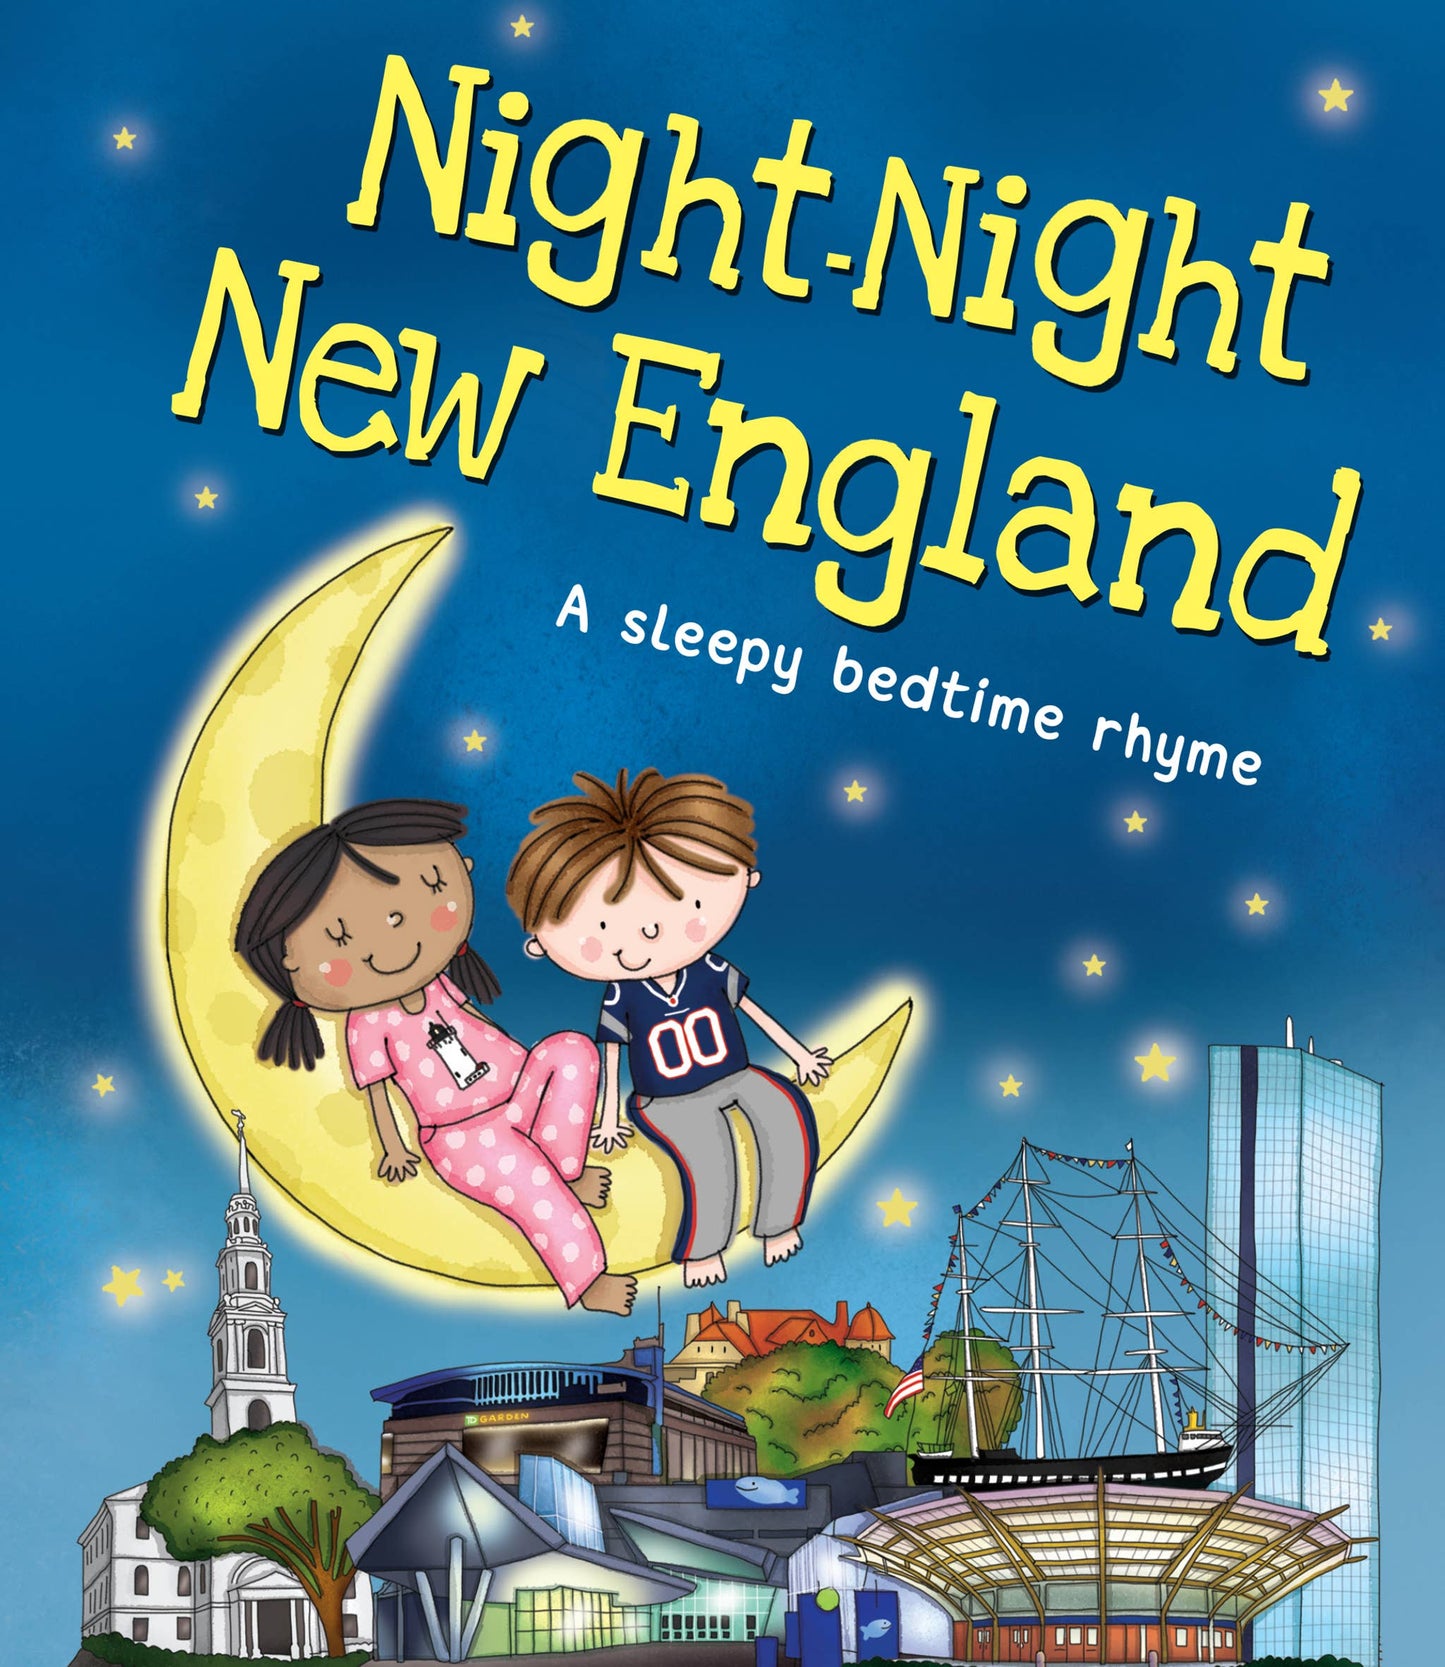 Night-Night New England (BBC)